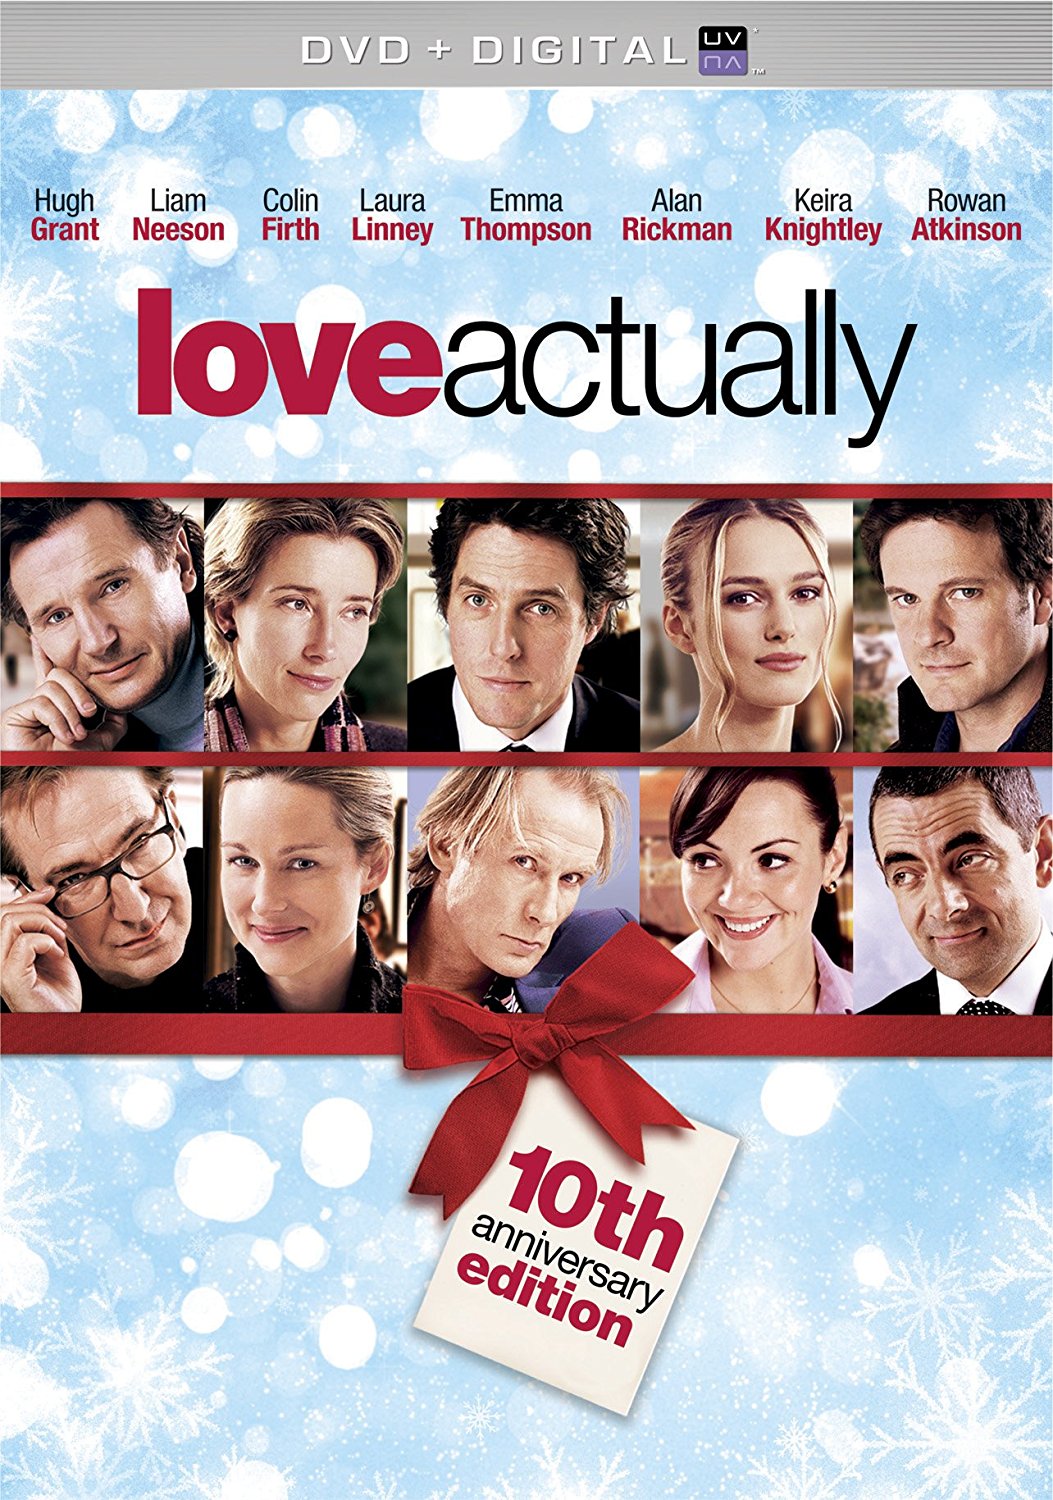 Love Actually - 10th Anniversary Edition (2003) Hugh Grant (Actor), Liam Neeson (Actor), Richard Curtis (Director)